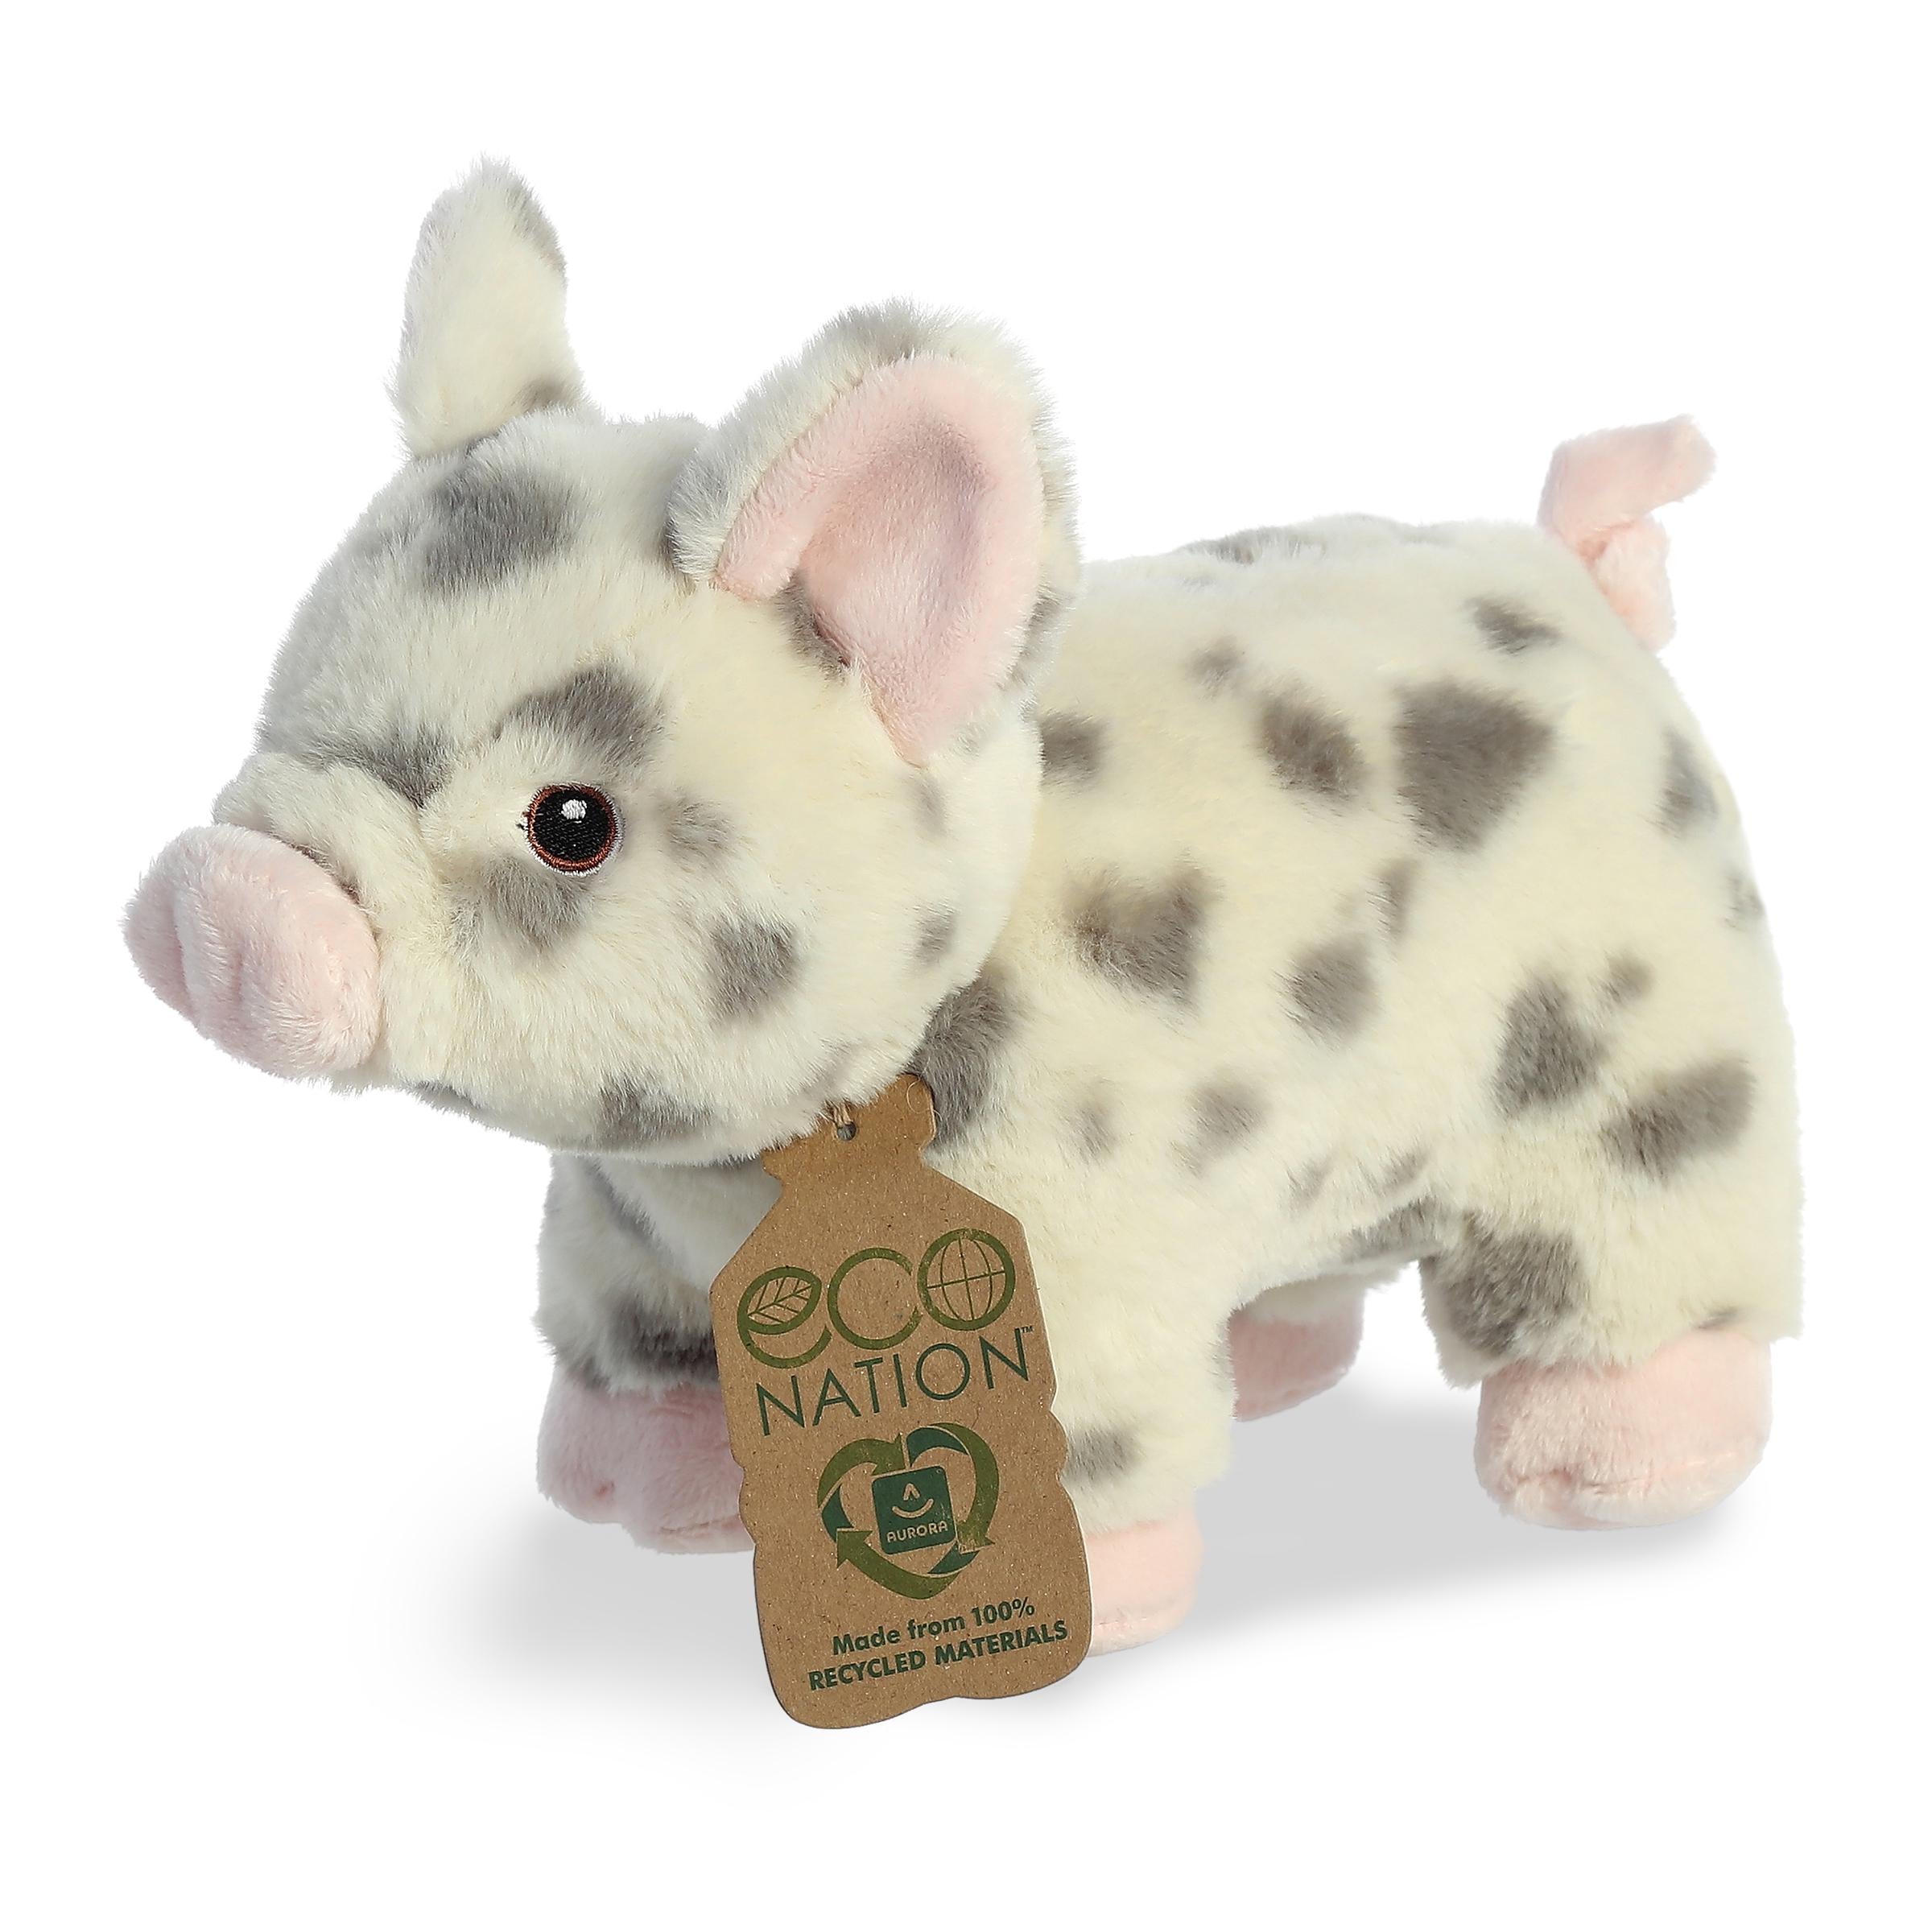 Spotted Pig Ã¢â‚¬â€œ Cuddly Eco-Nation Stuffed Animals Ã¢â‚¬â€œ